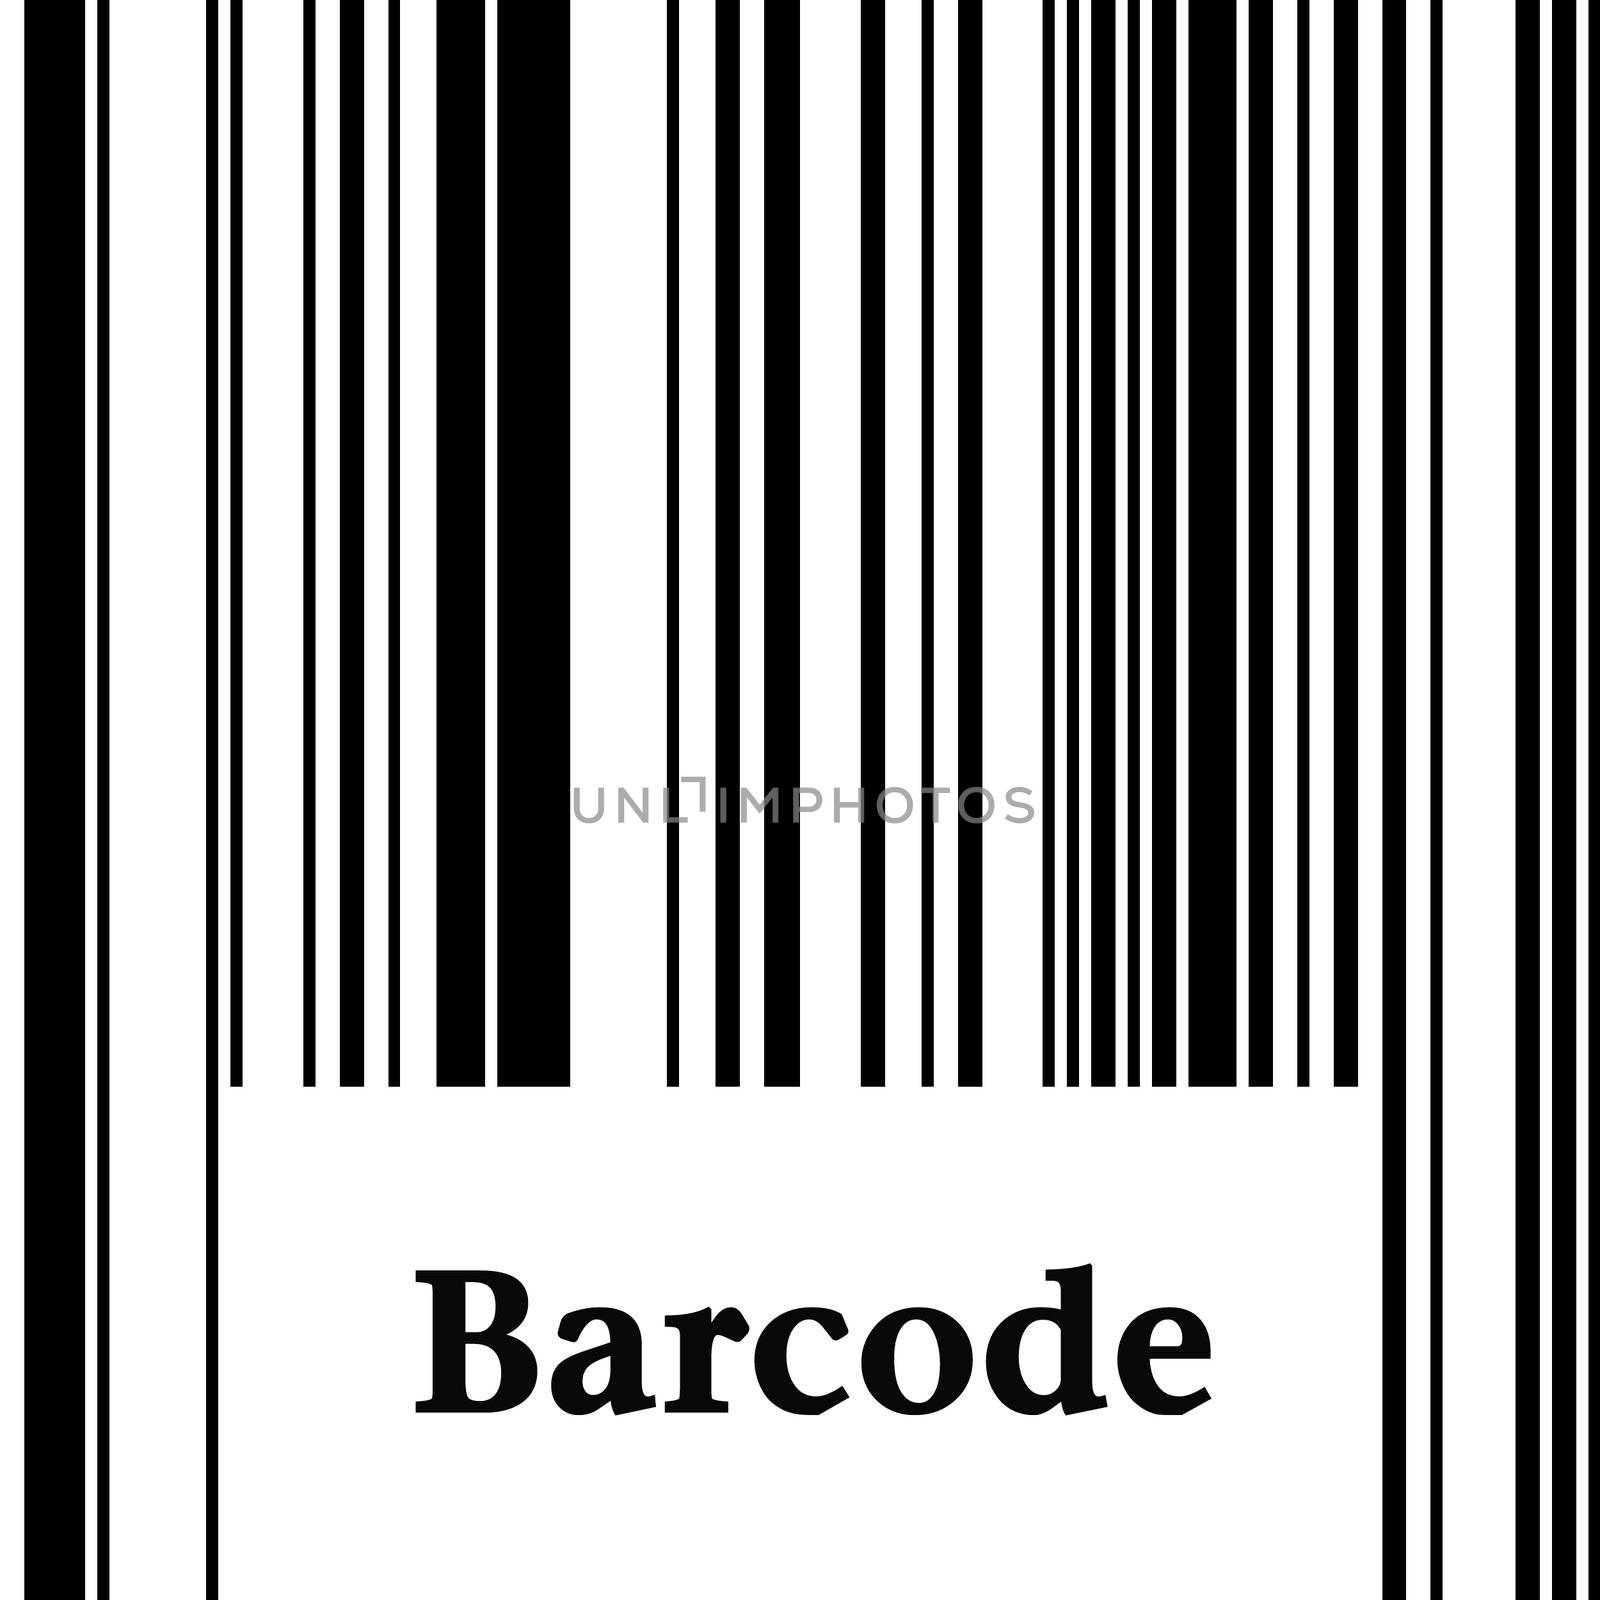 Barcode by Georgios